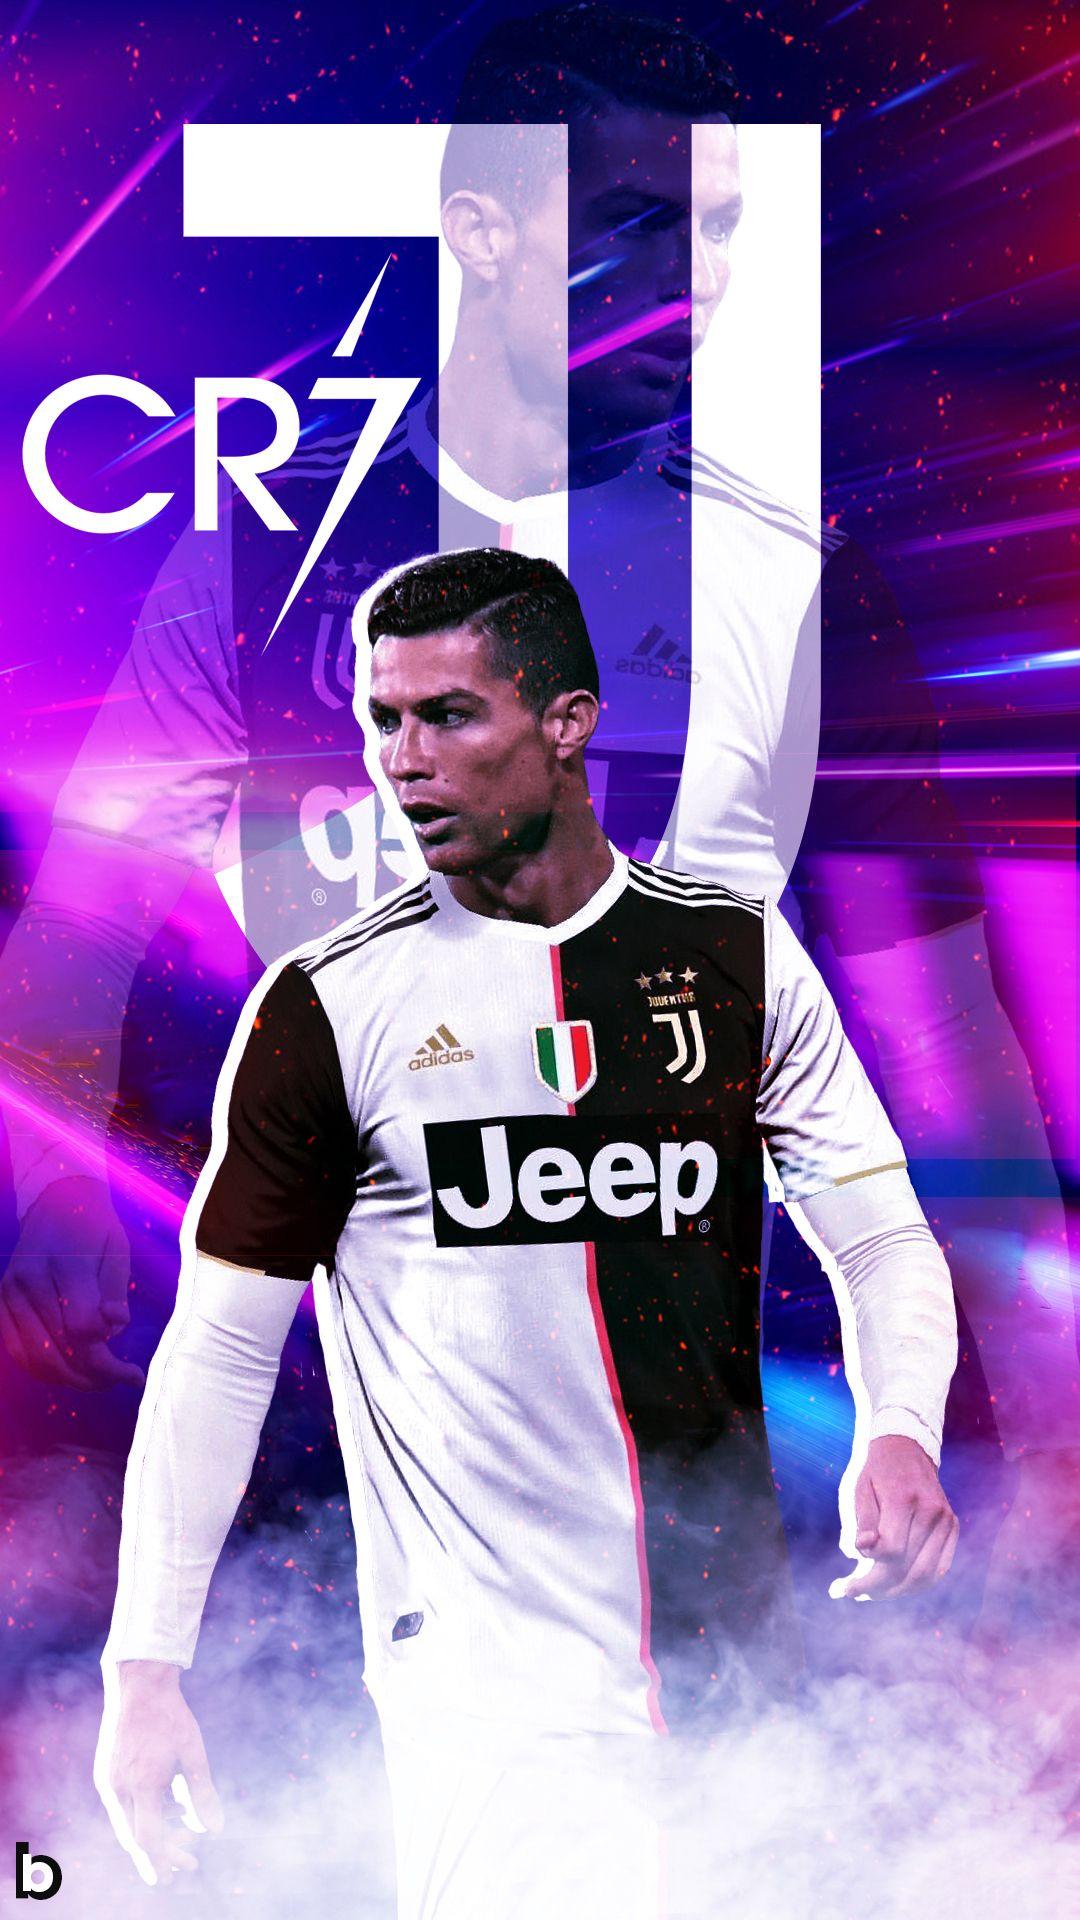 Cristiano Ronaldo Wallpaper - HD (CR7 - 2021) APK for Android Download